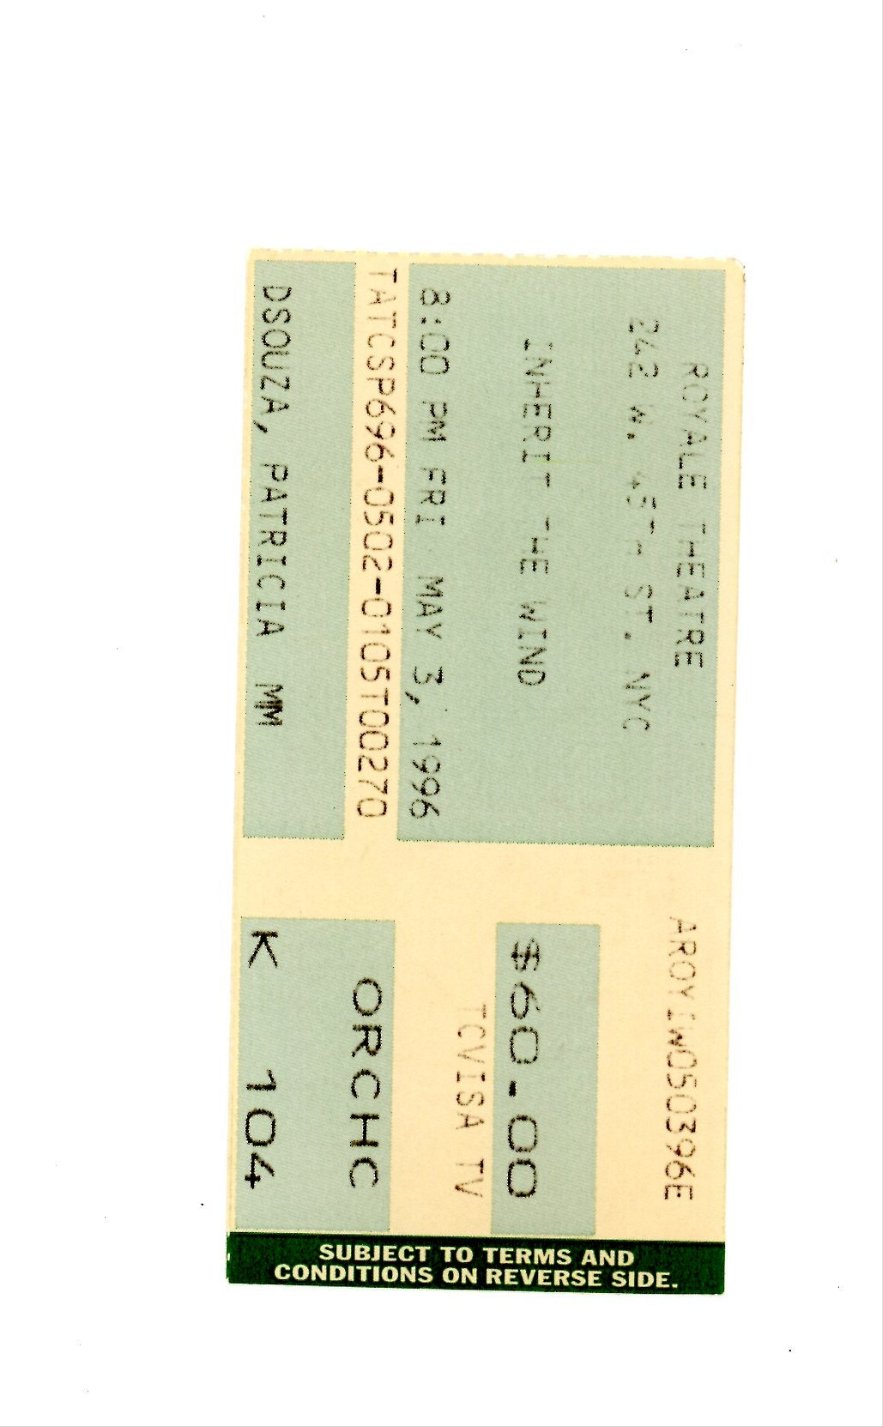 Original Inherit The Wind Vintage Concert Ticket Stub Royale Theatre (New York, 1996)